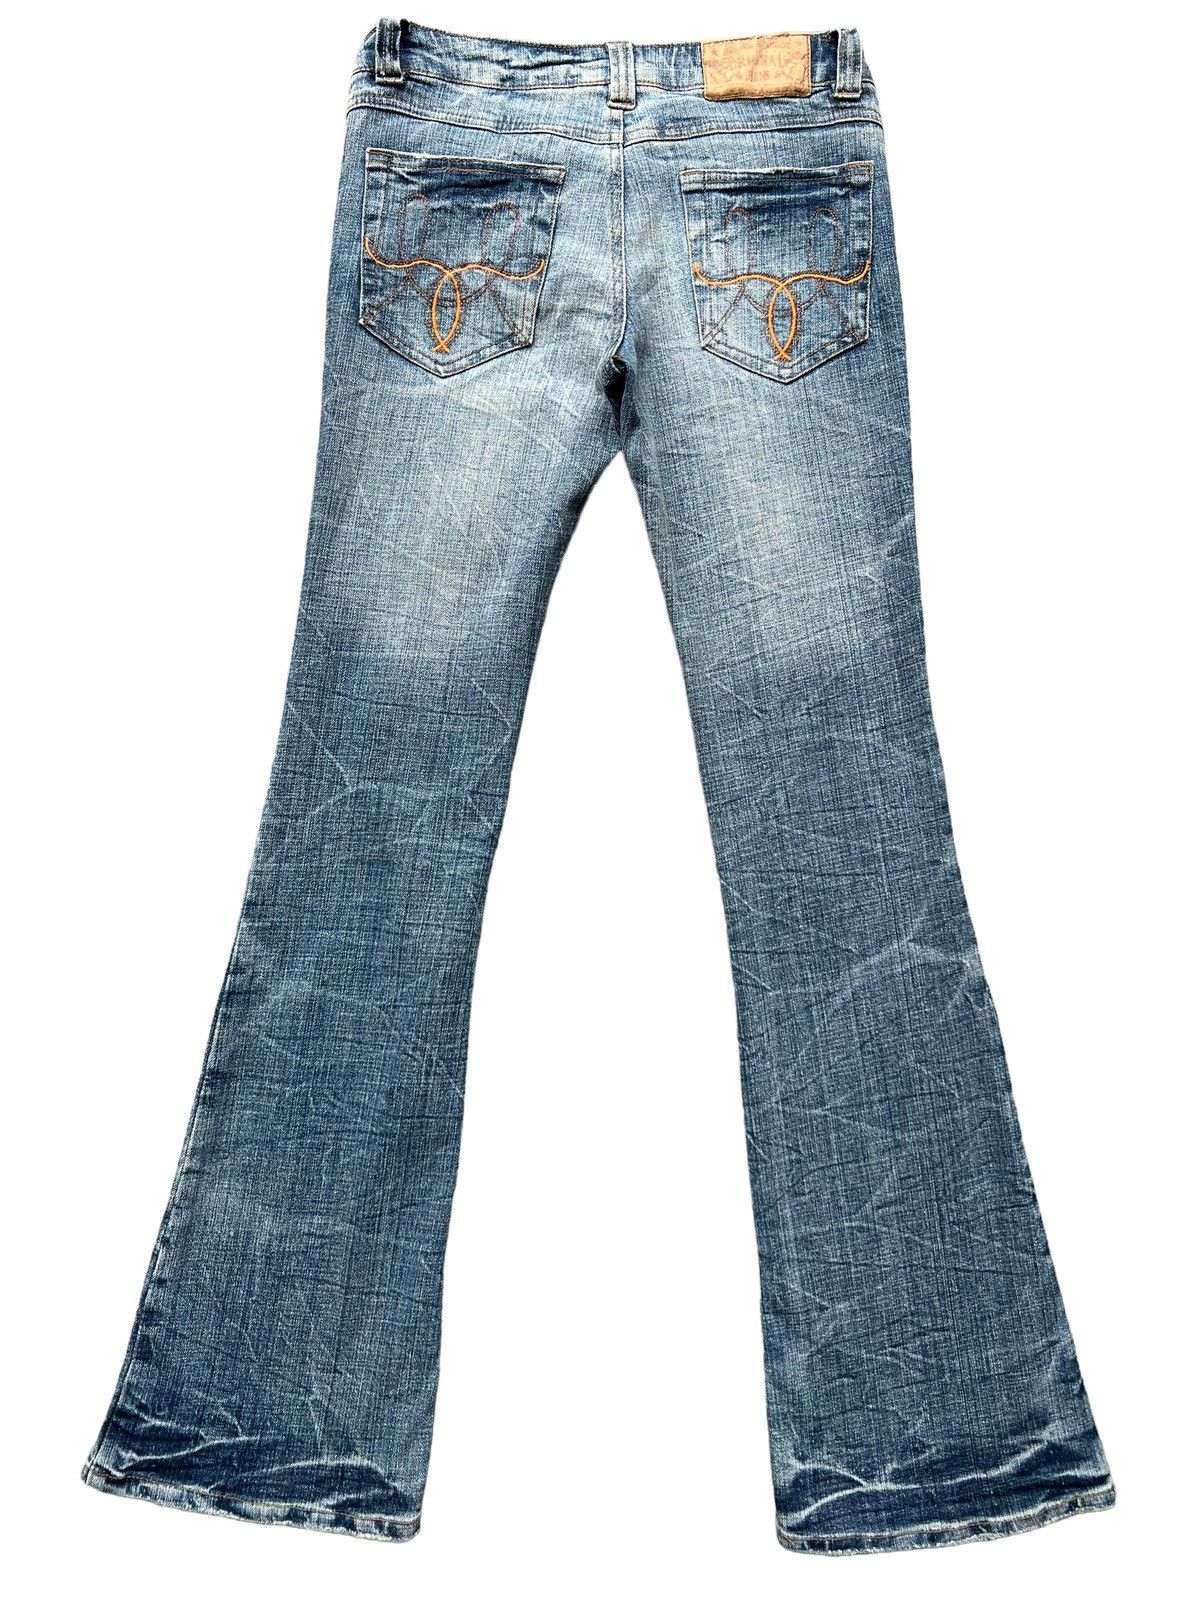 Hype - Vintage Standard Distressed Lowrise Flare Denim Jeans 29x32 - 3